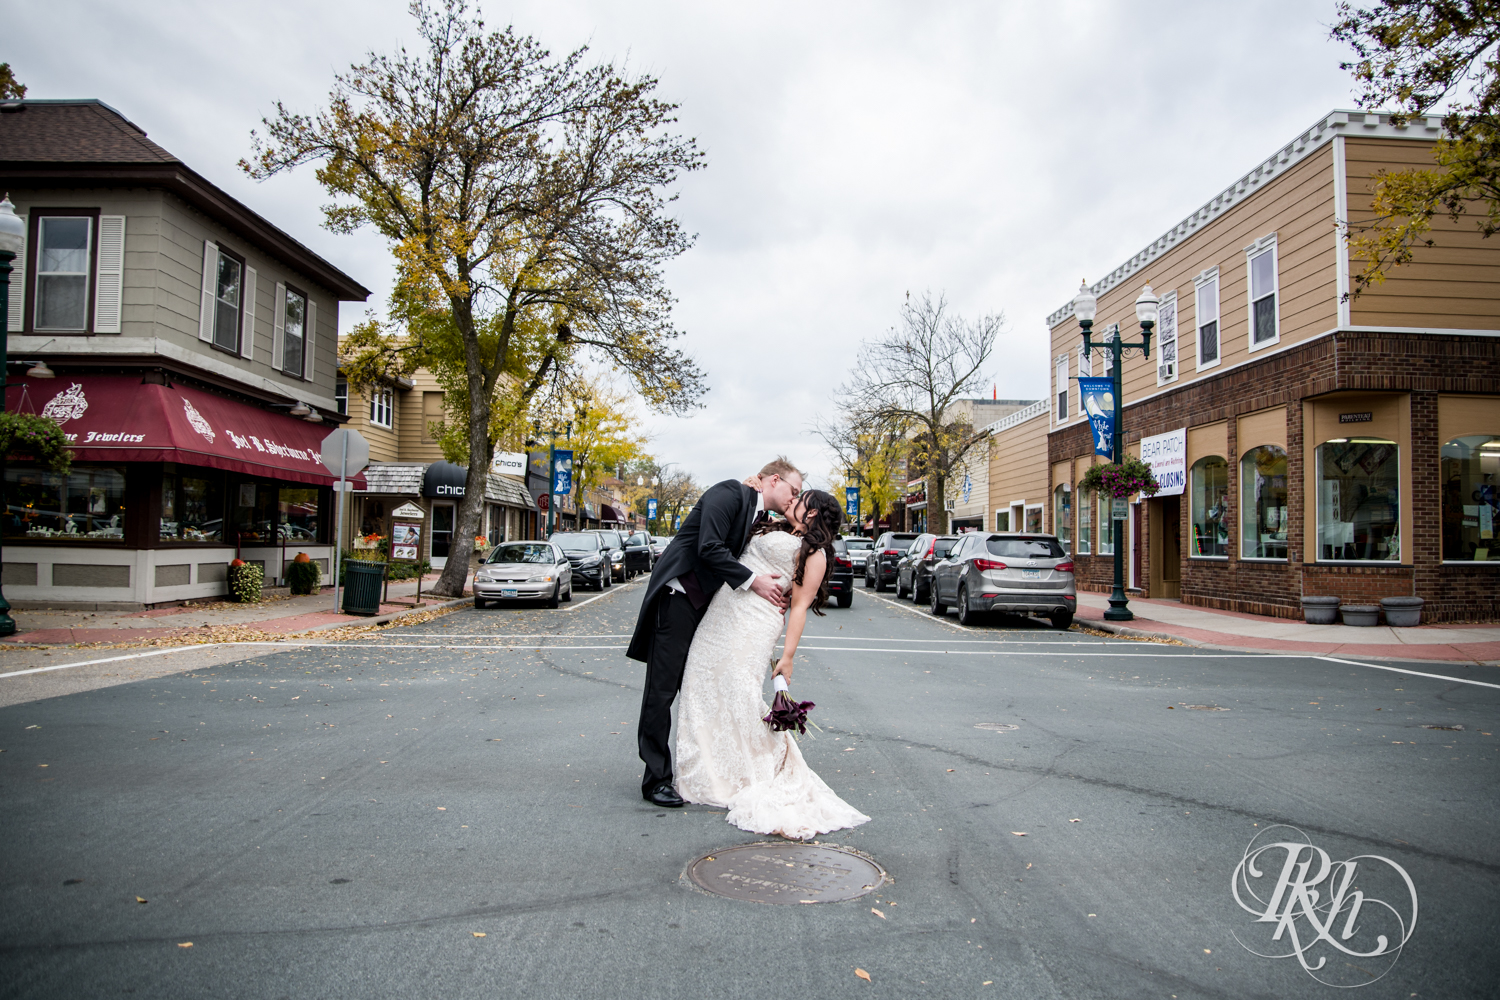 Bride and groom kiss in street at Kellerman's Event Center in White Bear Lake, Minnesota.